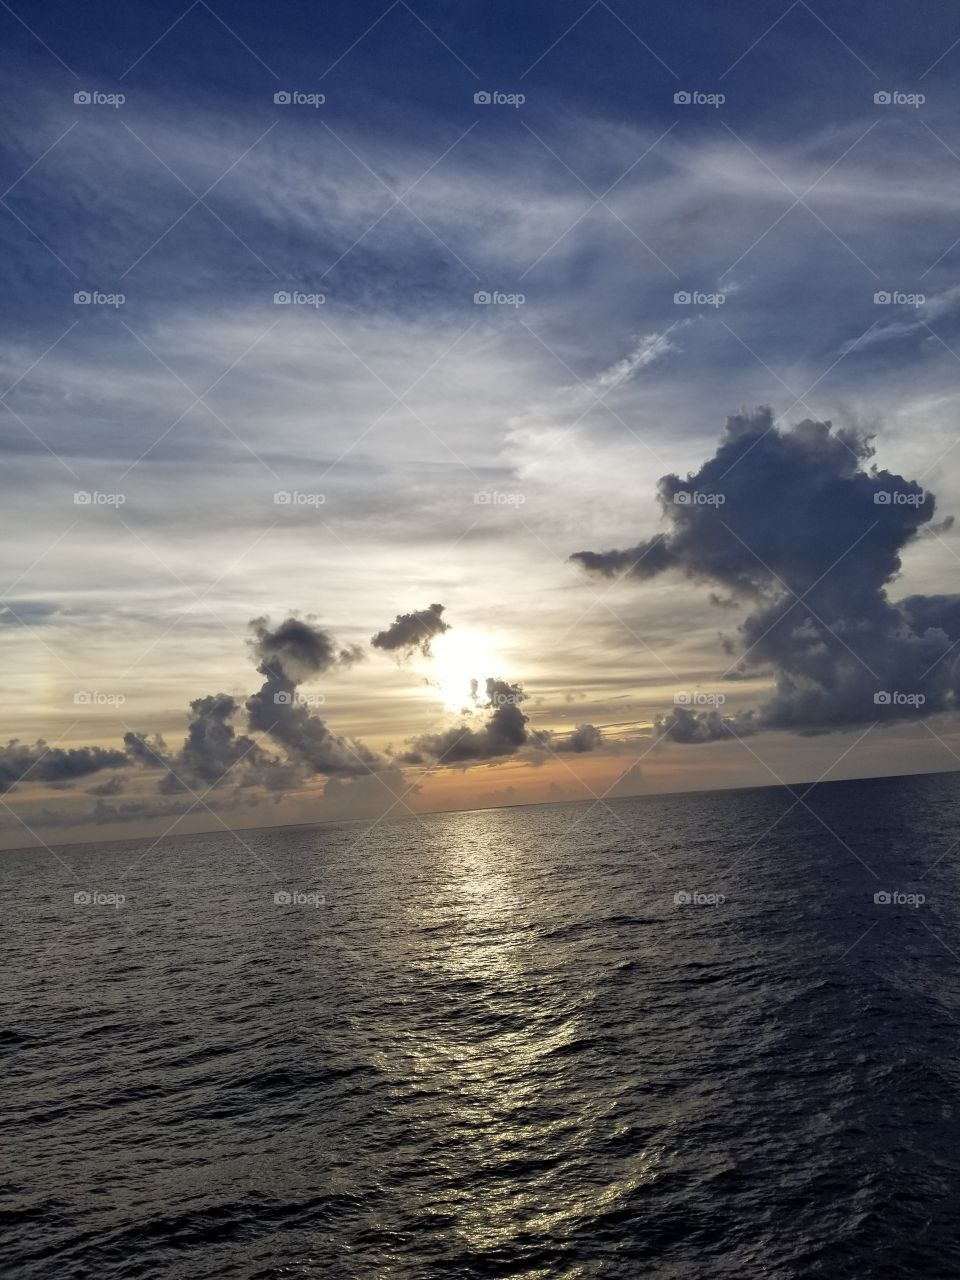 A sunset on the carival cruise ships sunshine